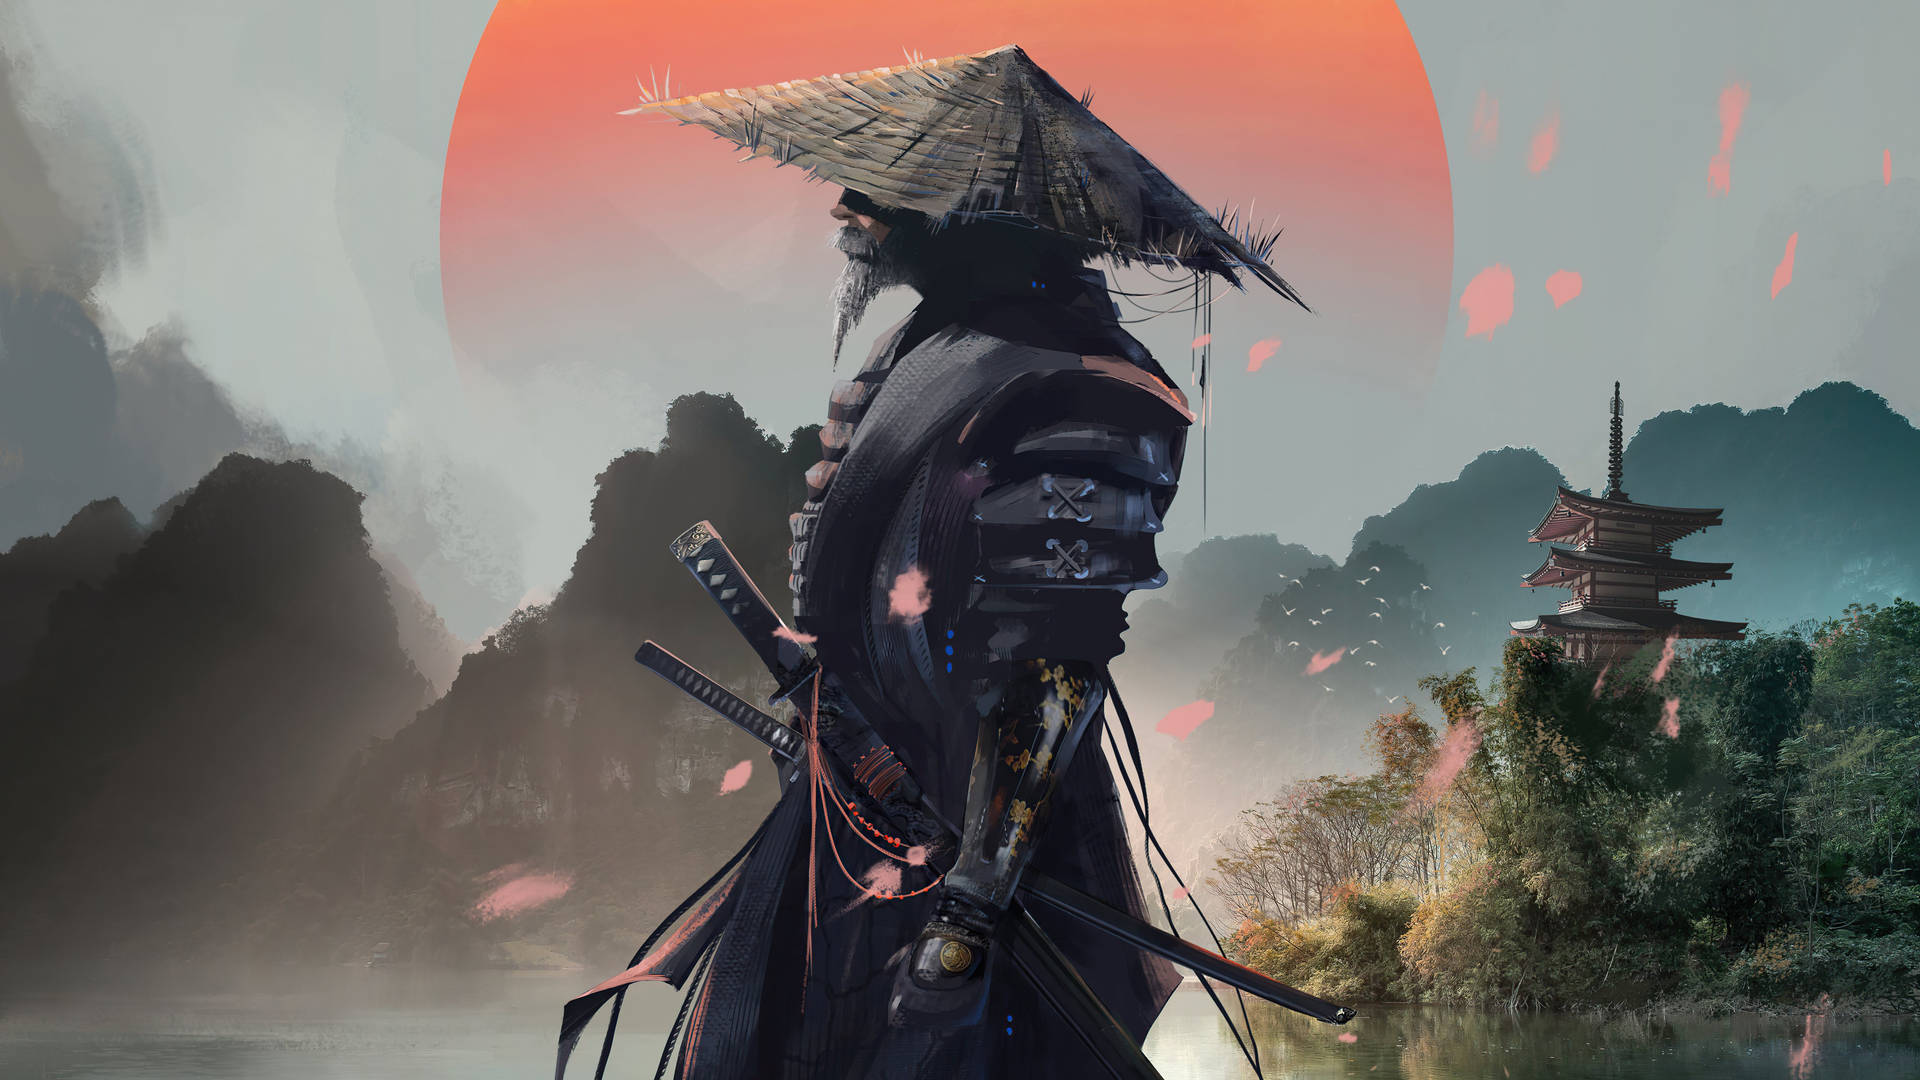 Free 8k Samurai Wallpaper Downloads, [100+] 8k Samurai Wallpapers for FREE  